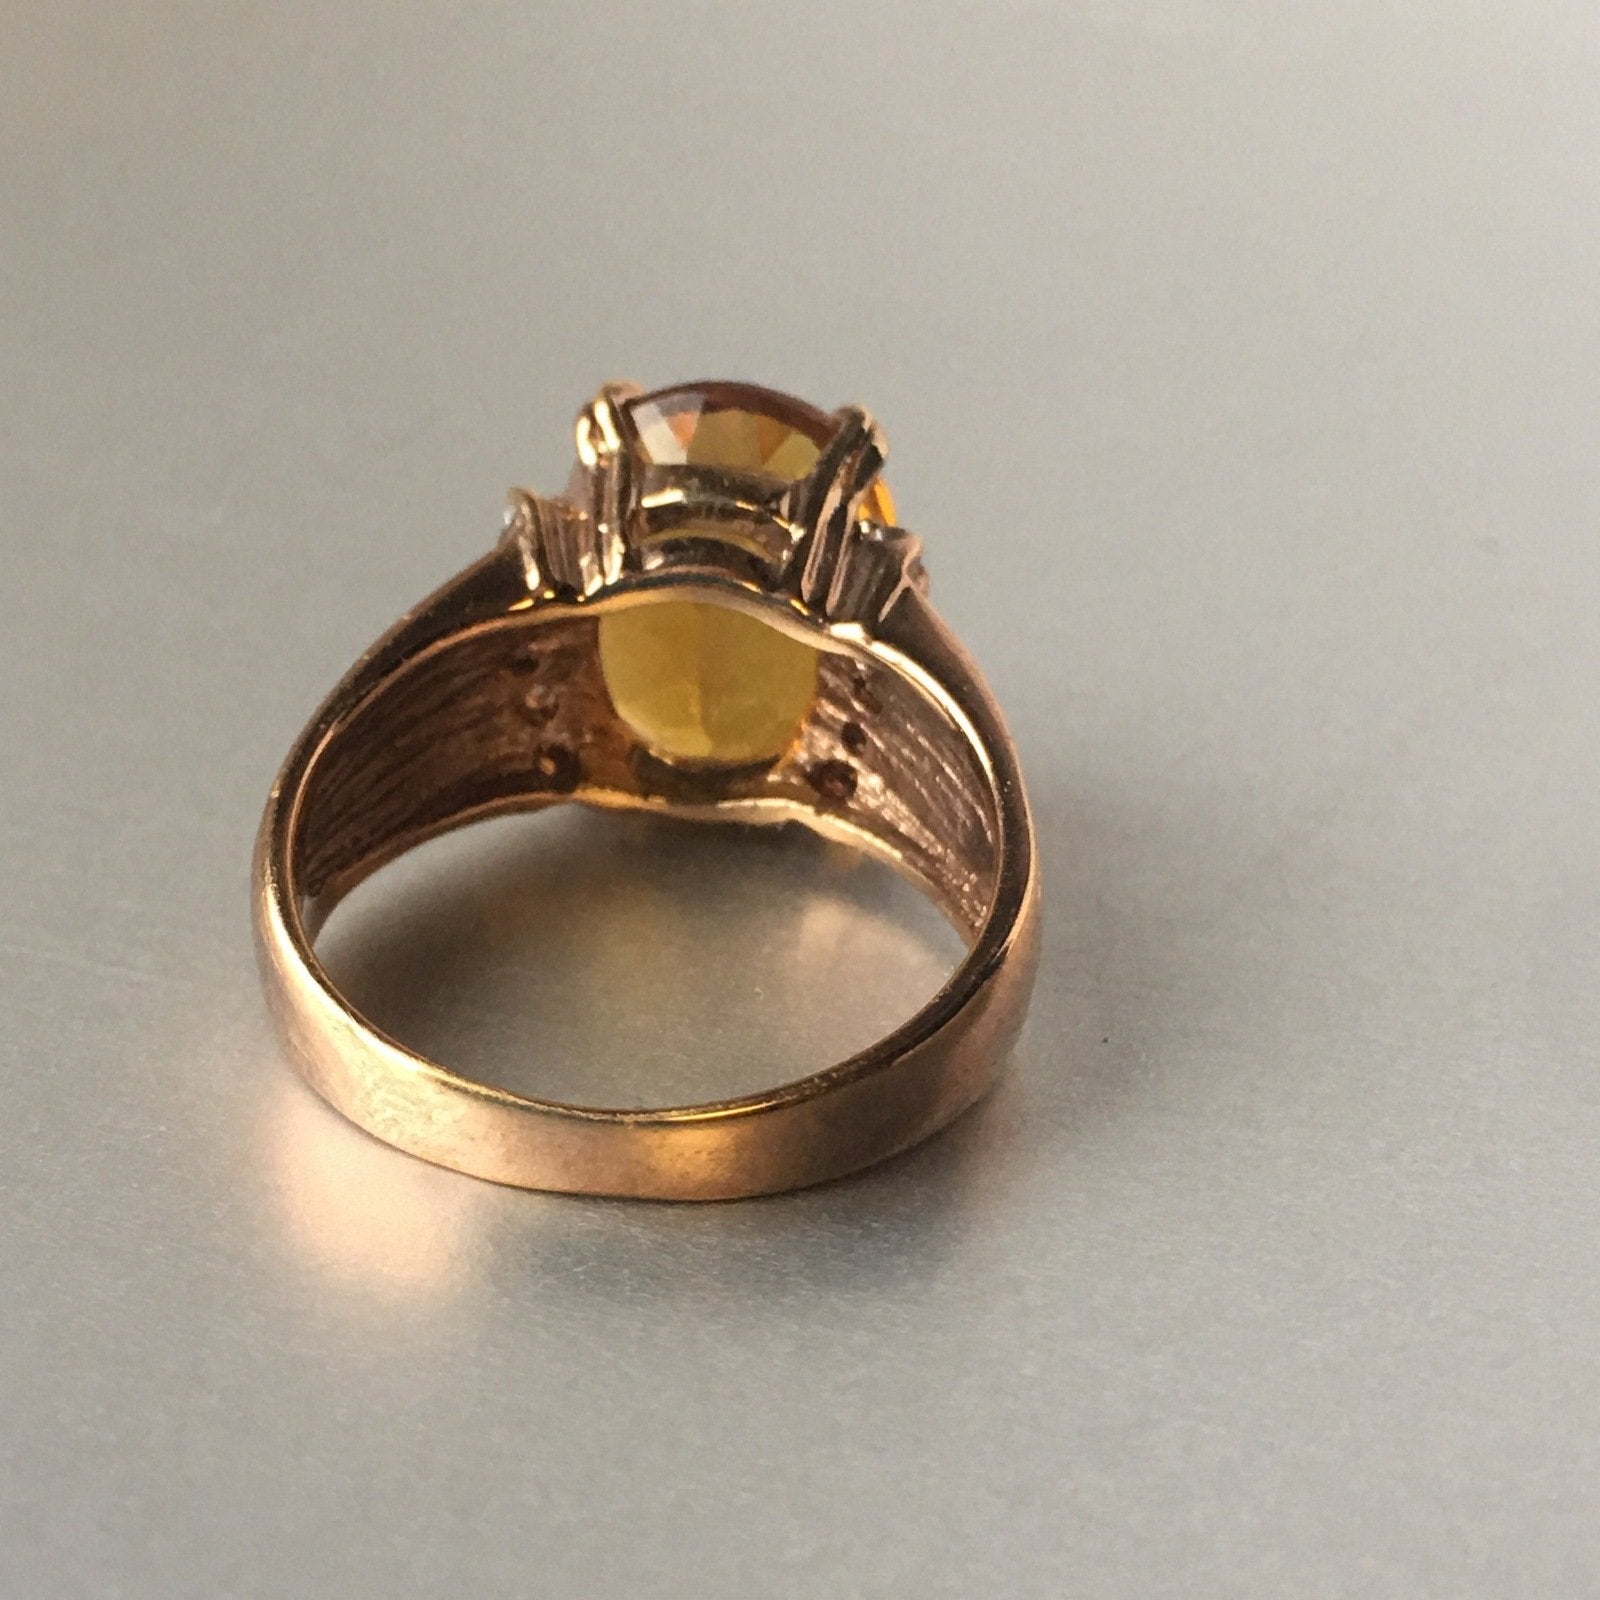 Citrine Yellow Rhinestone Cocktail Ring Contemporary Jewelry